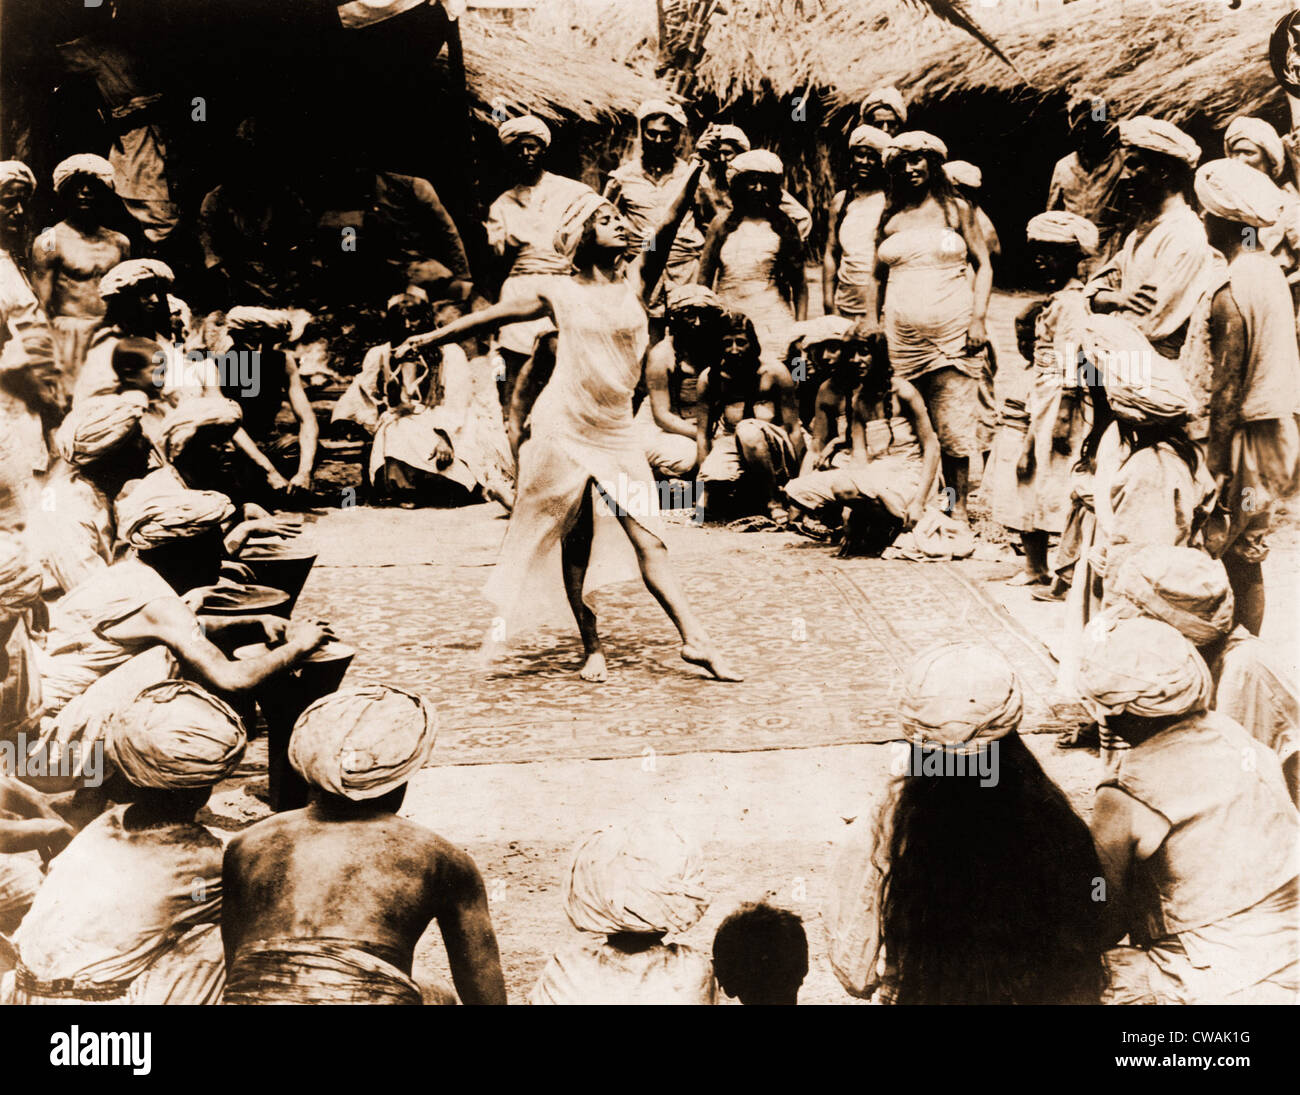 Nautch girl, a young Indian dancing on rug with Hindu men and women watching. India, 1914. Stock Photo